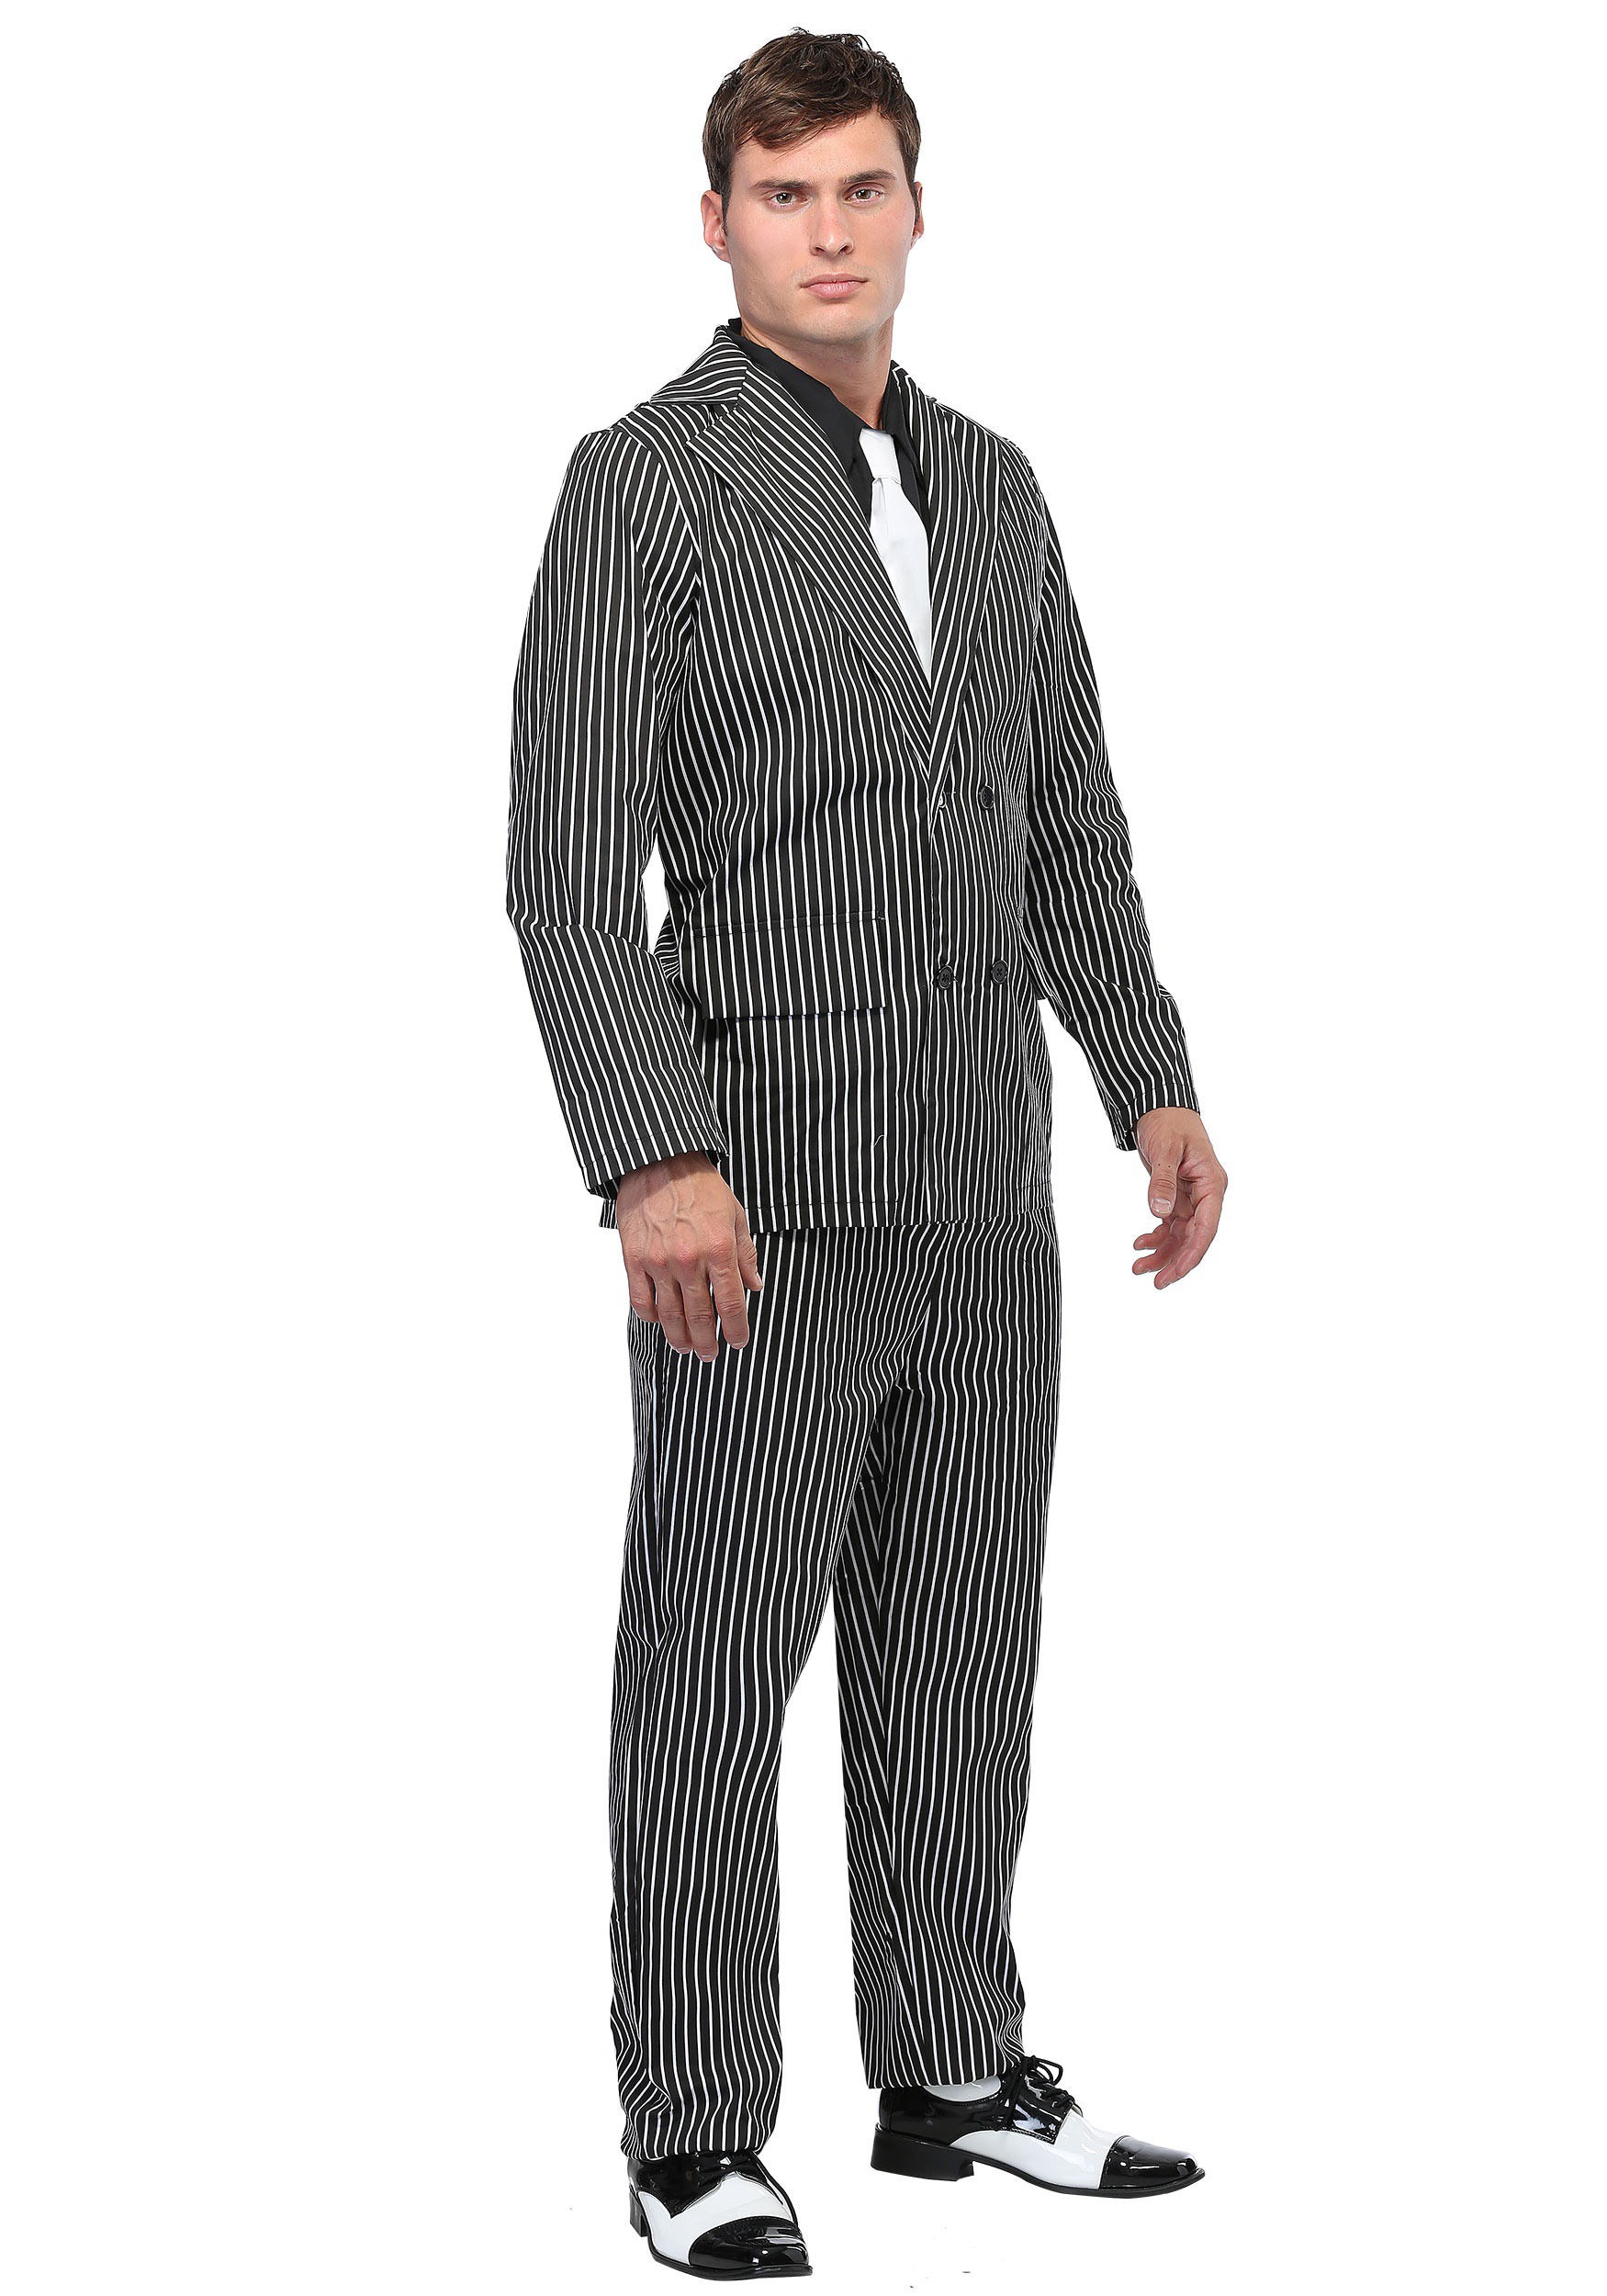 Wide Stripe Plus Size Gangster Suit Costume for Men